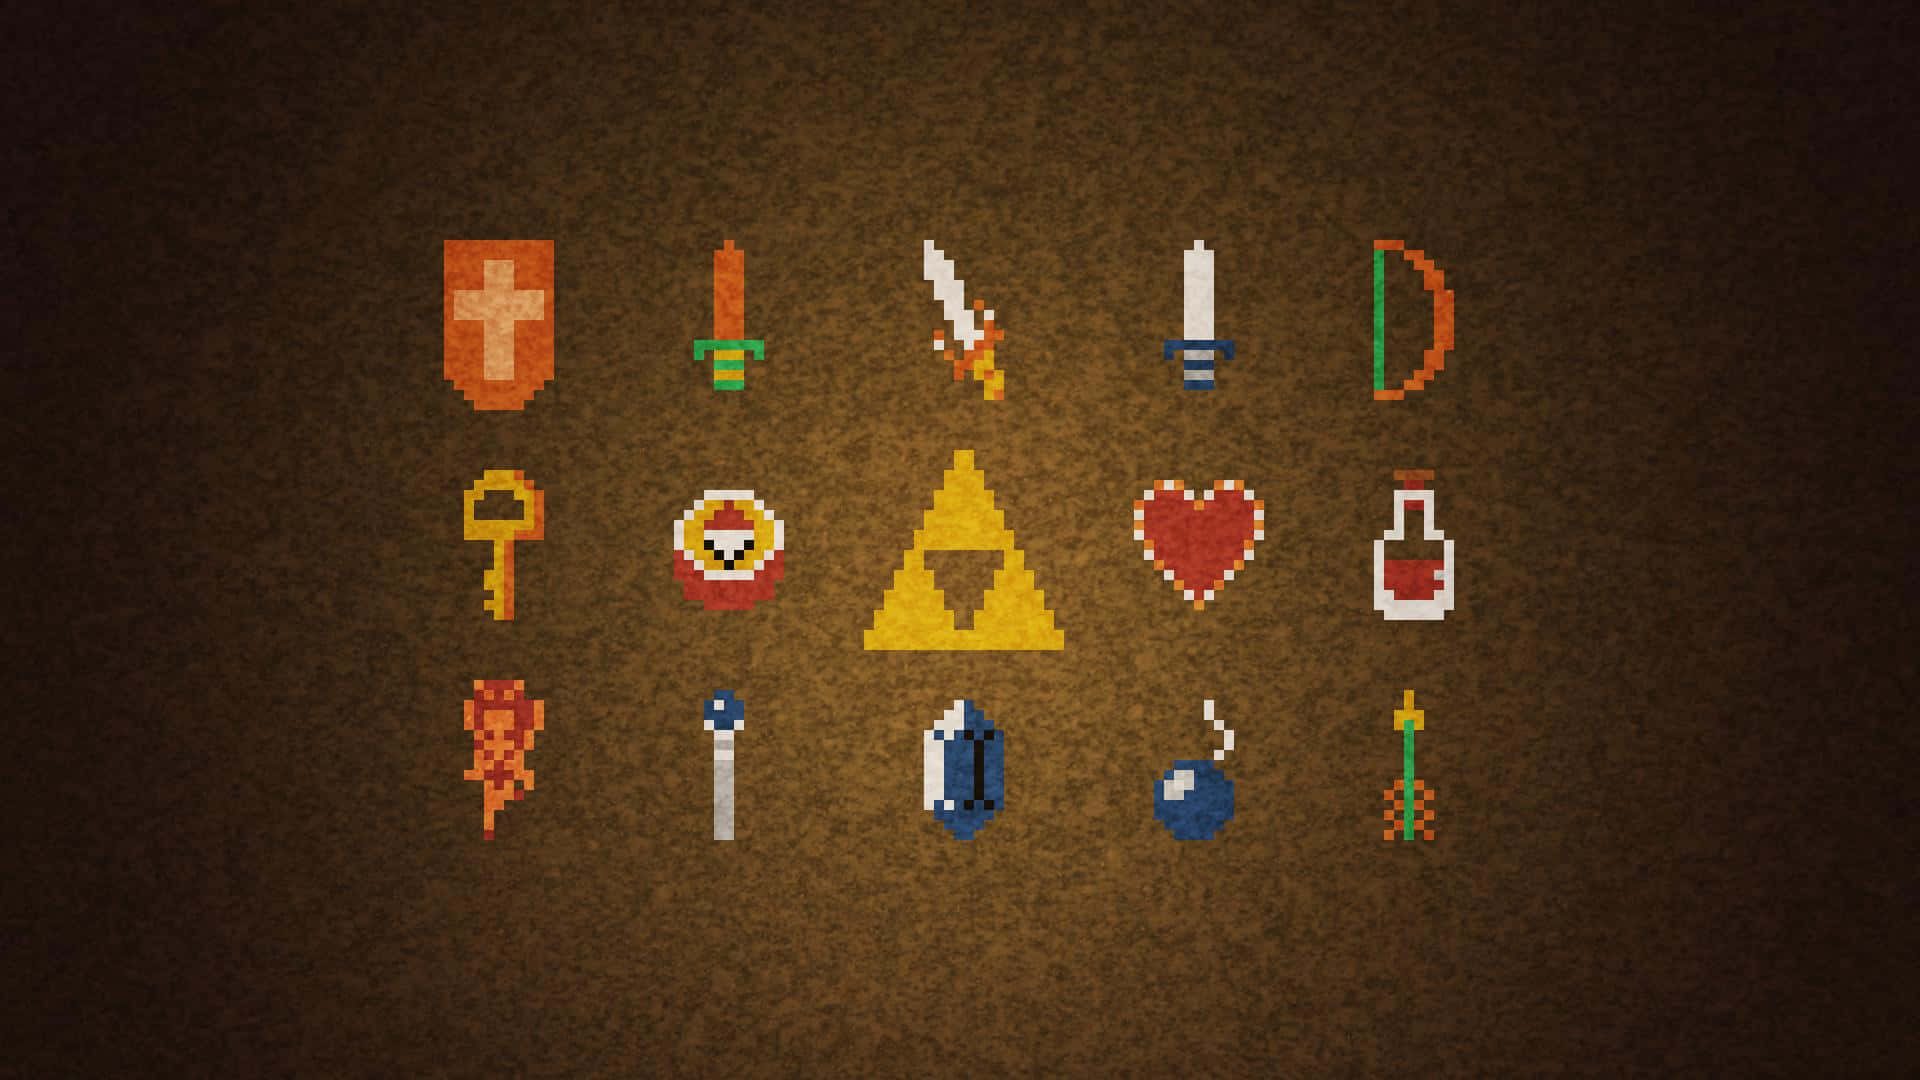 A Pixel Art Image Of Various Pixel Art Items